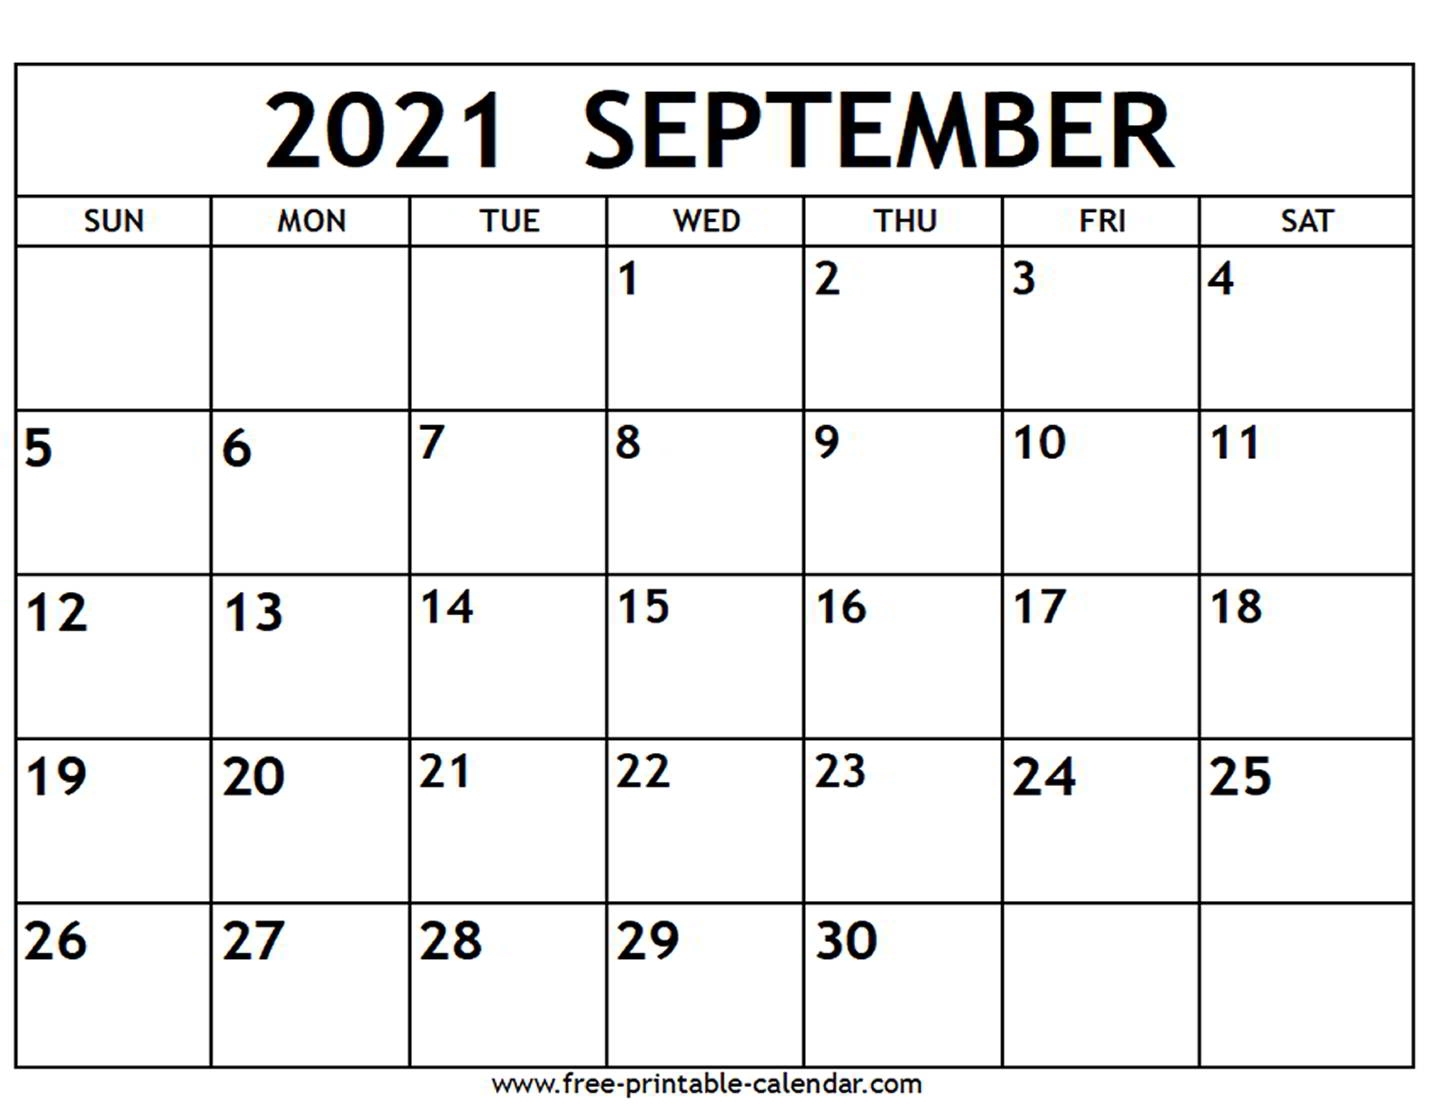 September 2021 Calendar - Free-Printable-Calendar